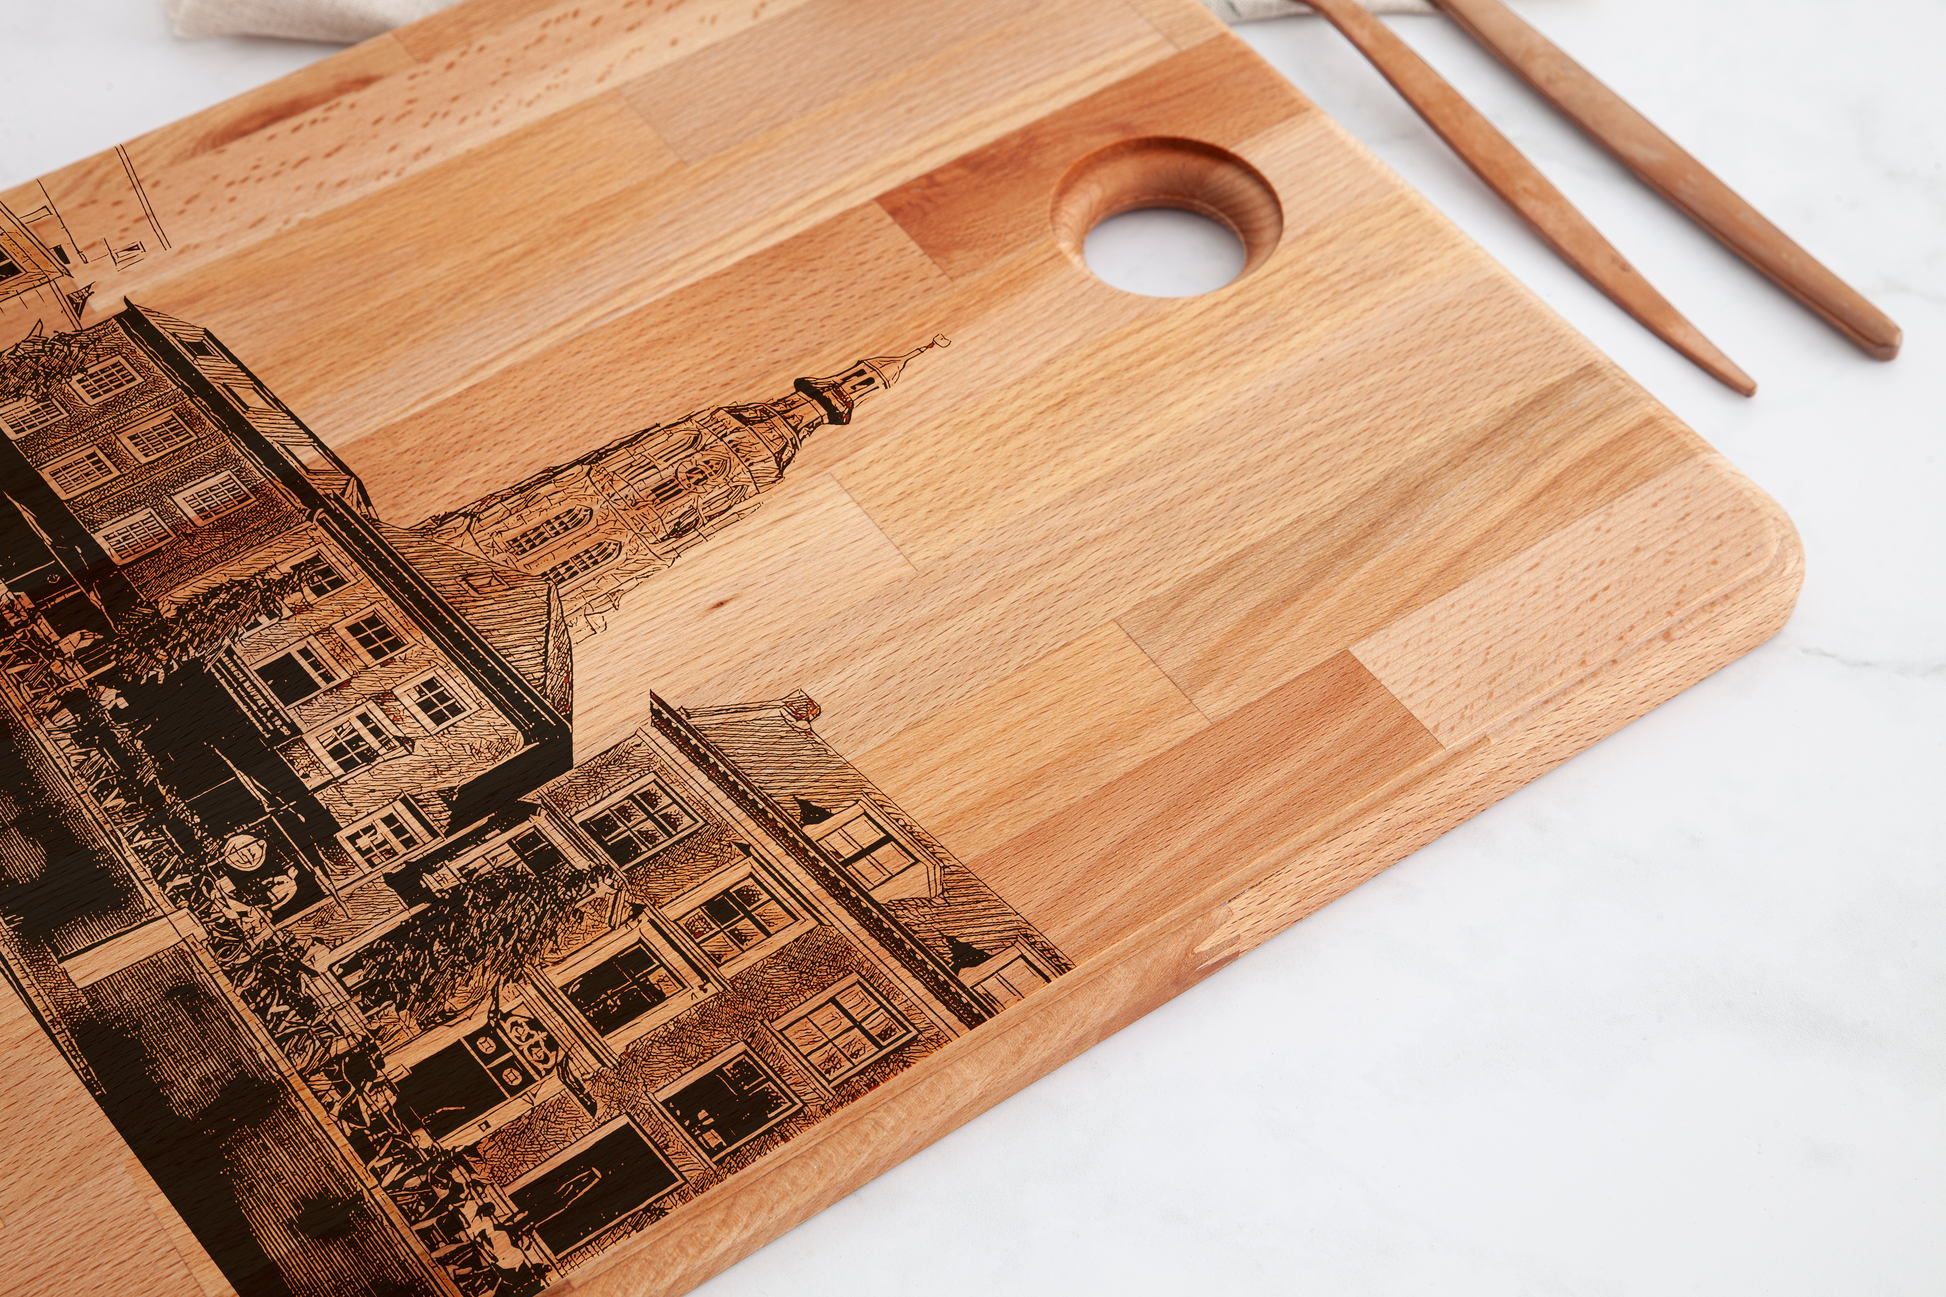 Breda, Grote Kerk, cutting board, wood grain